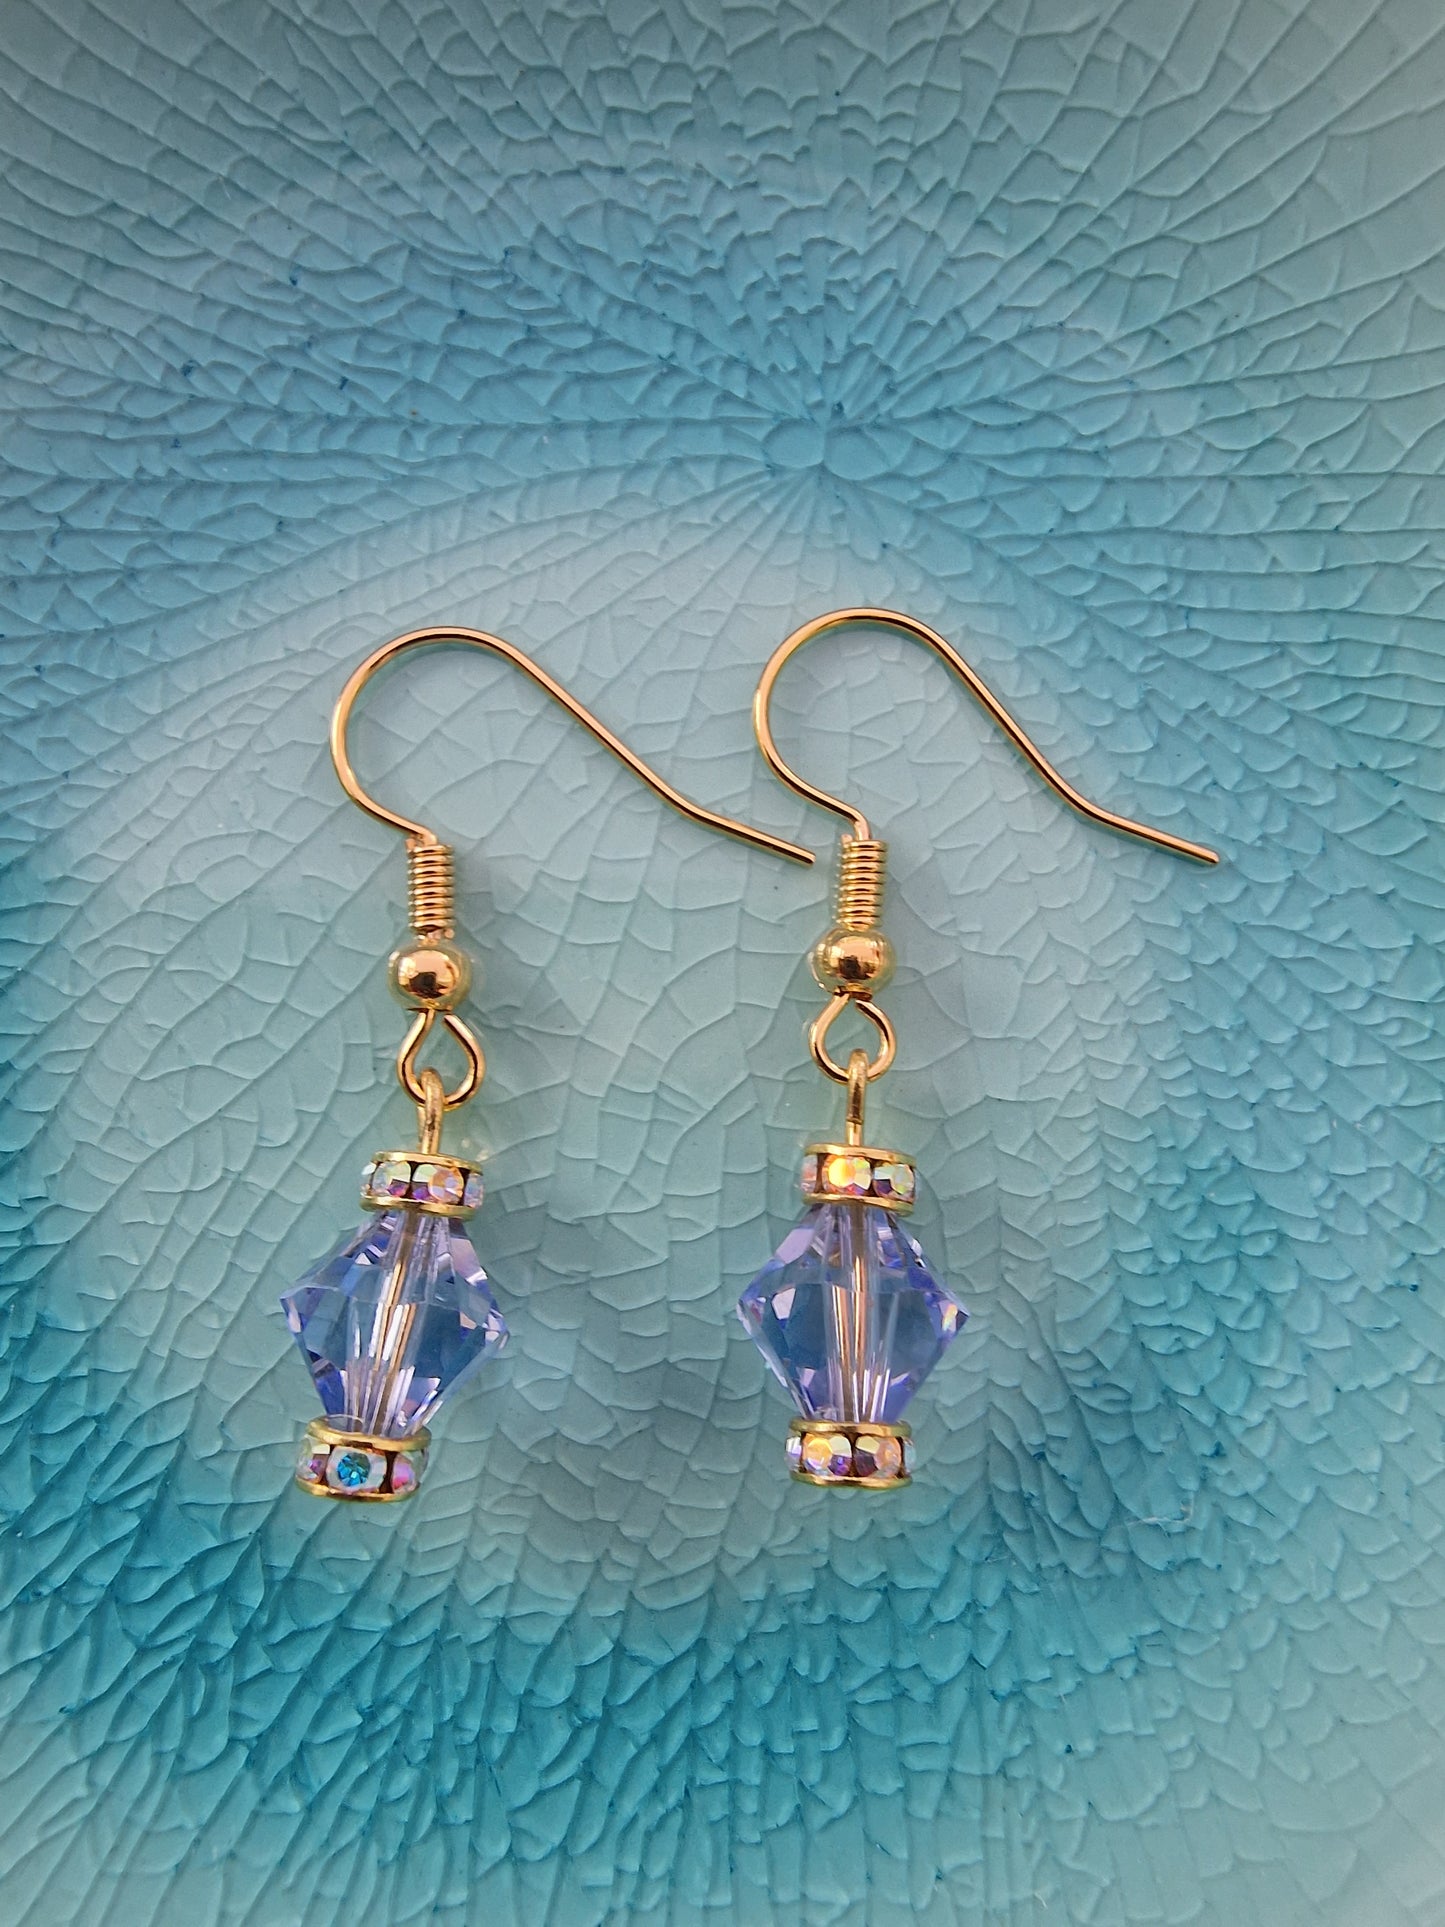 Lavender Swarovski earrings